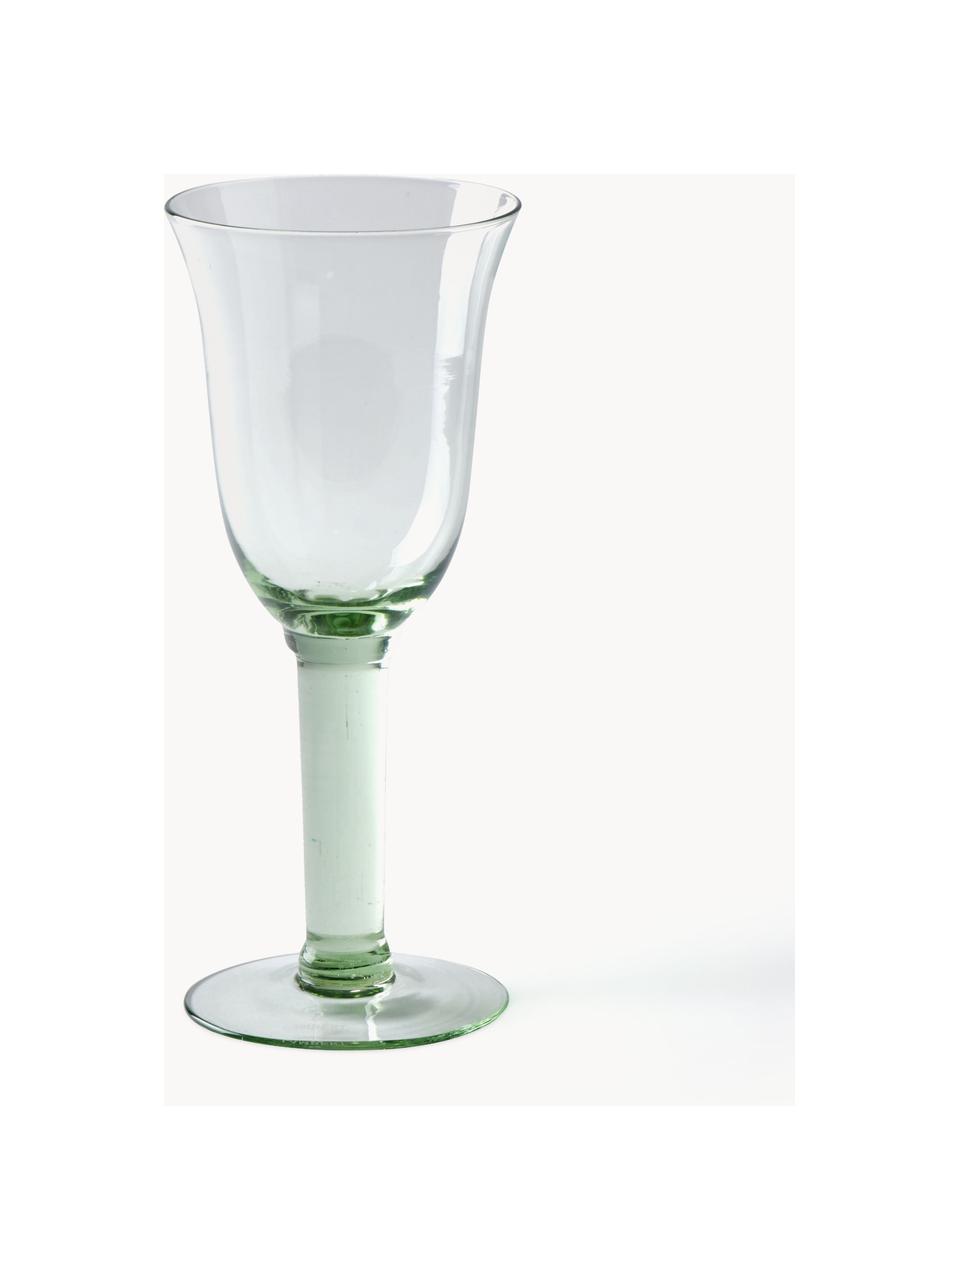 Mundgeblasene Weissweingläser Corsica, 6 Stück, Glas, Hellgrün, transparent, Ø 8 x H 19 cm, 350 ml